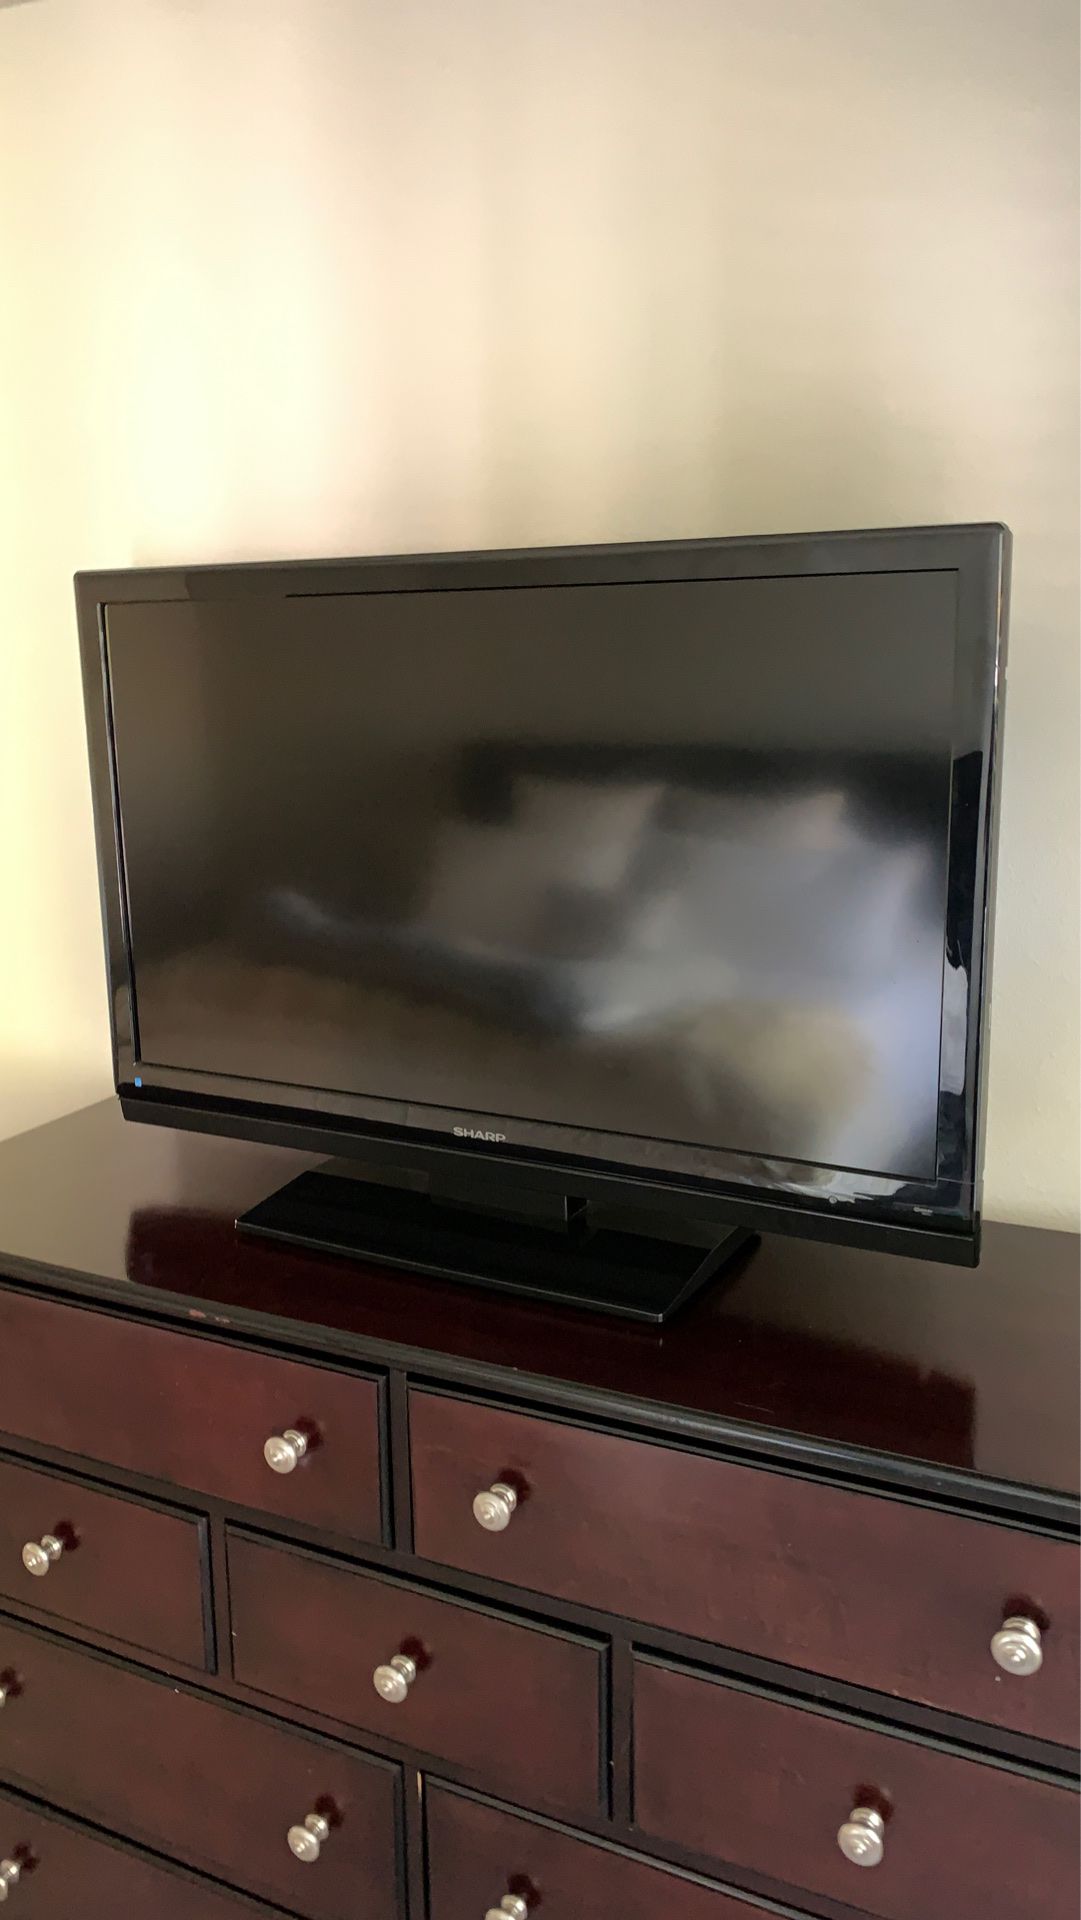 Sharp 42 inch TV